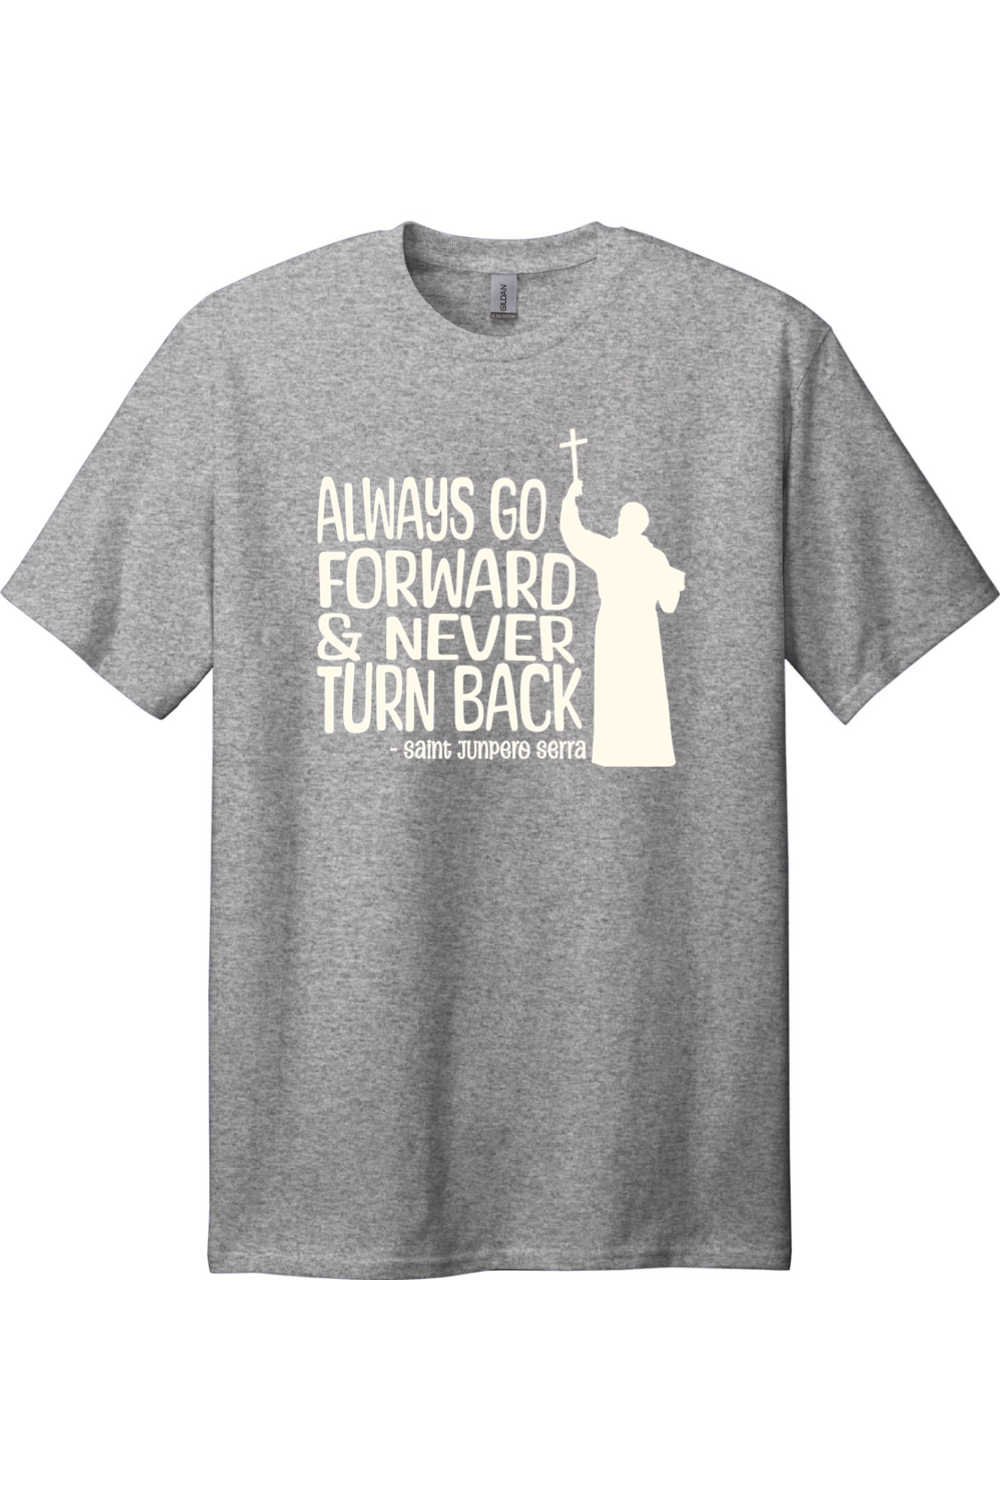 Always Go Forward - Saint Junipero Serra - Tall T-Shirt